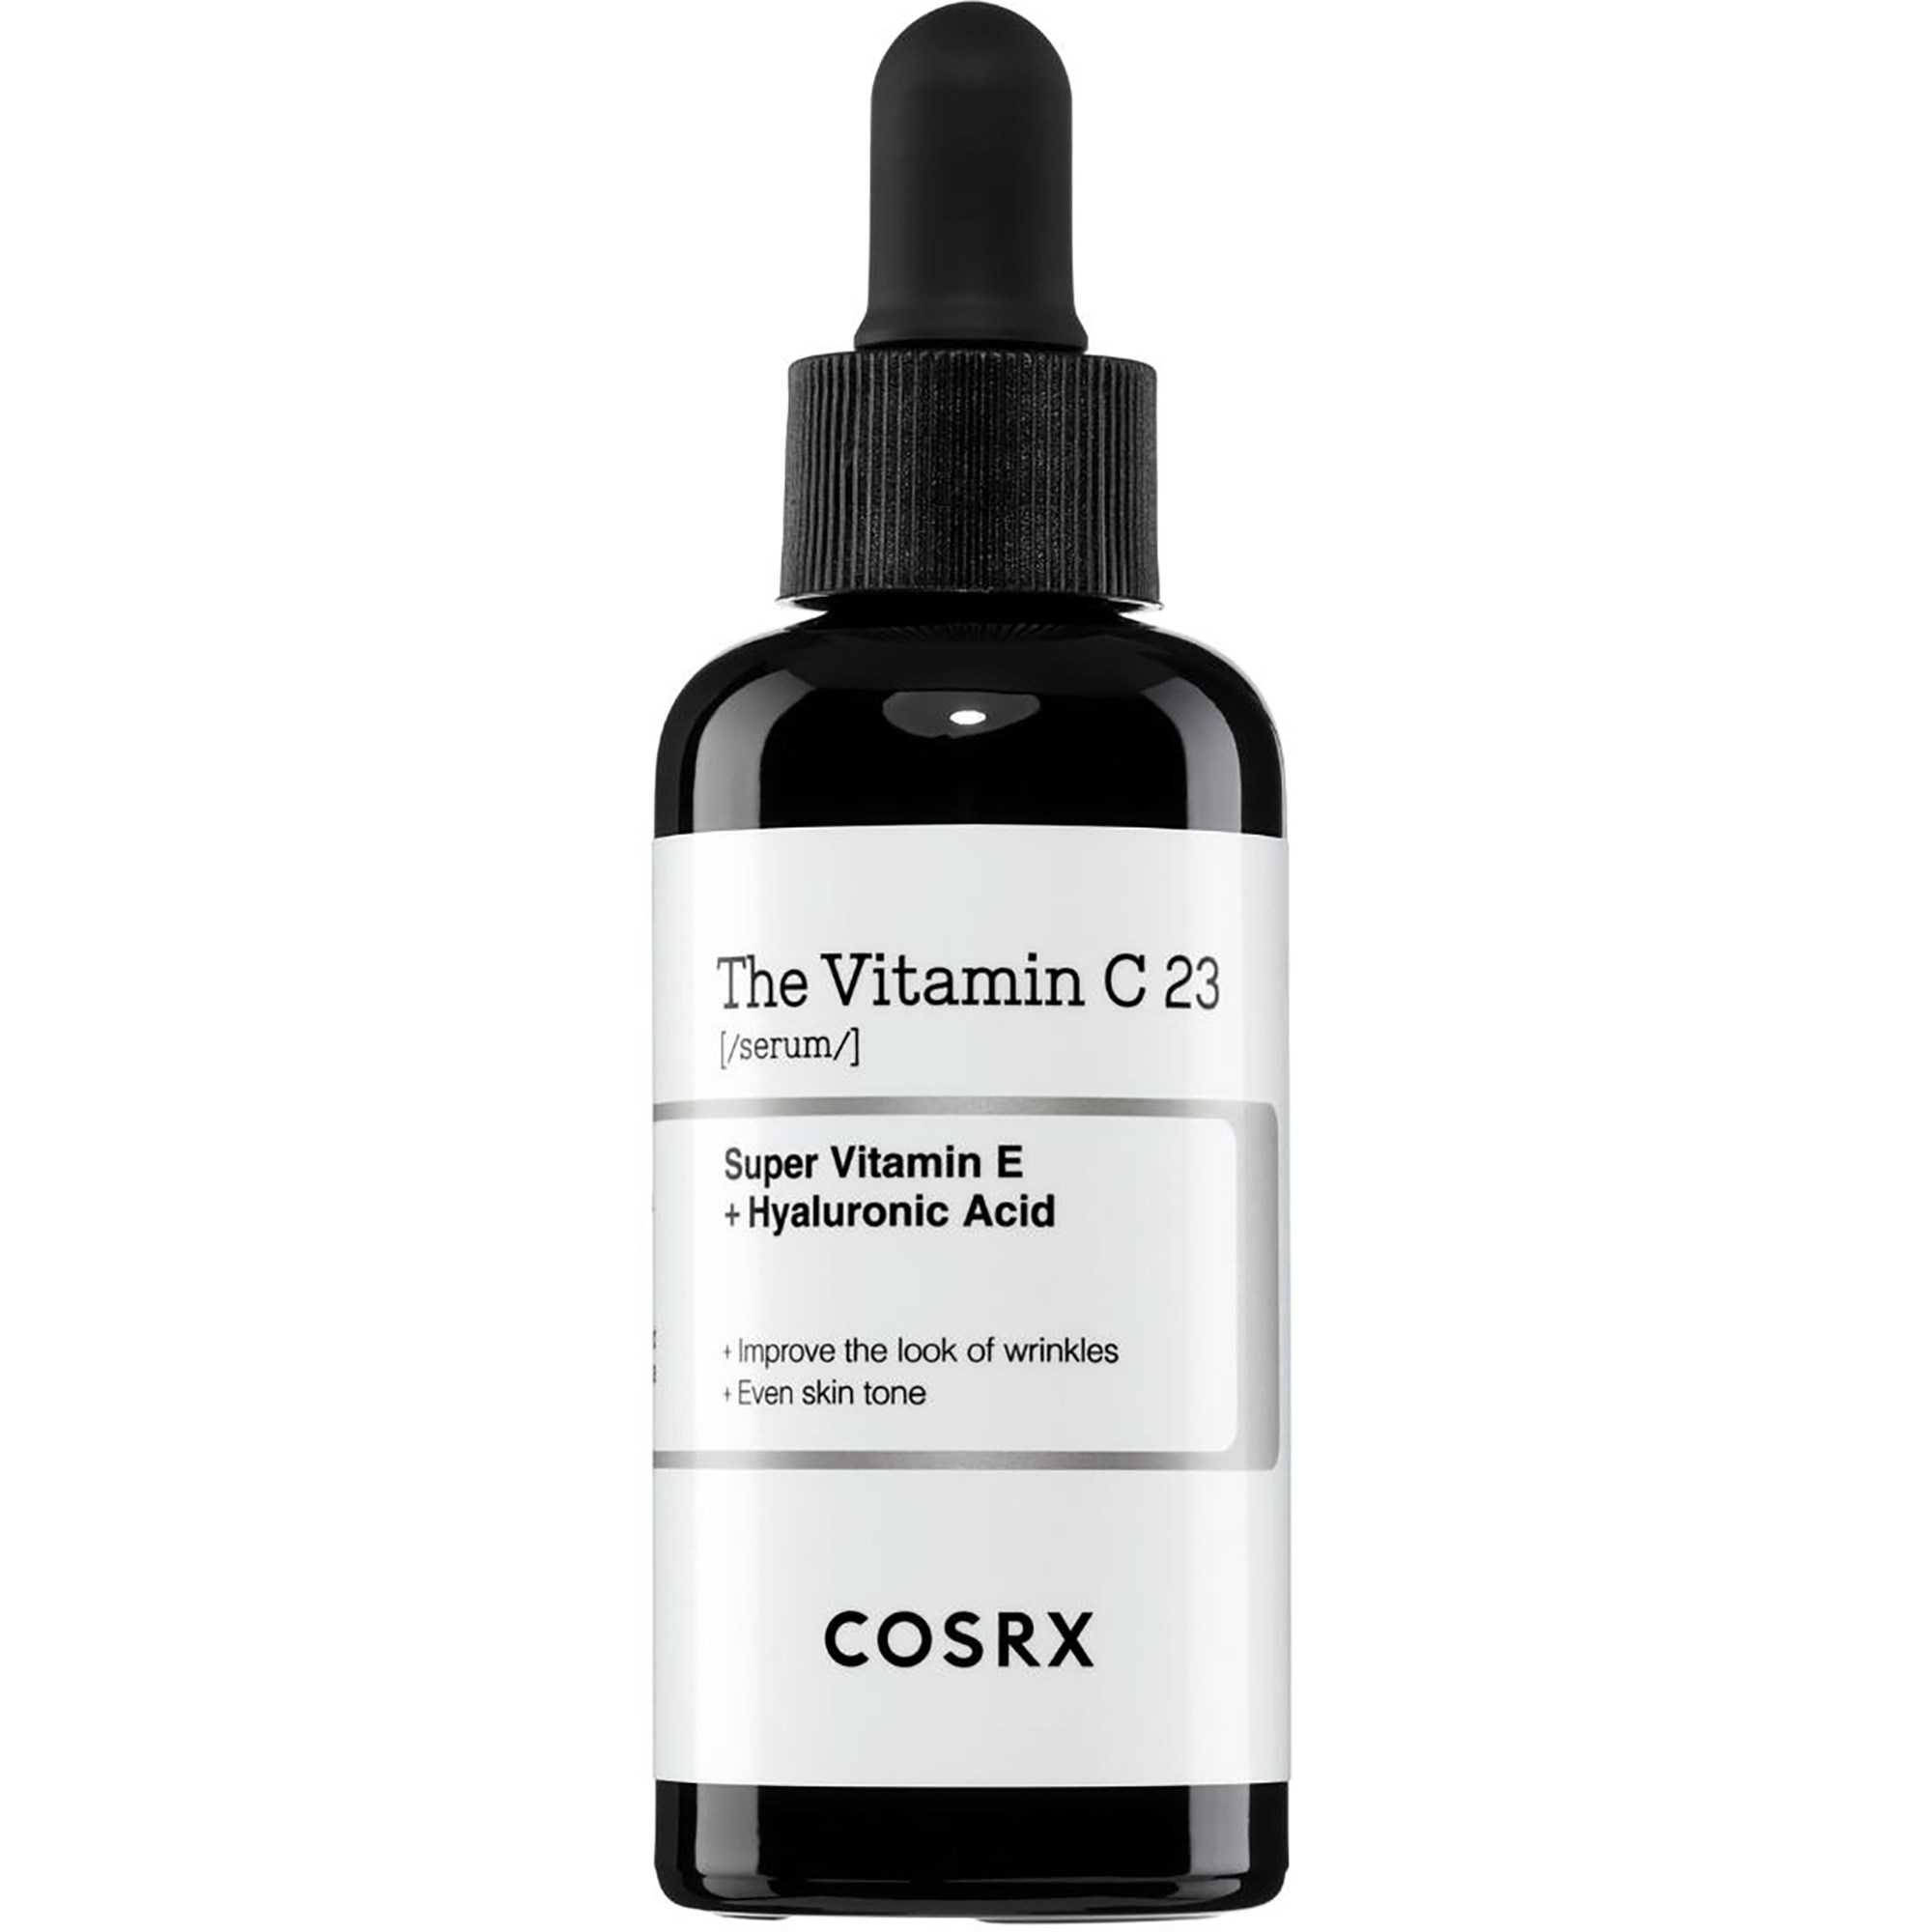 Zdjęcia - Kremy i toniki COSRX The Vitamin C 23 Serum 20 ml - Serum do twarzy 20 ml 